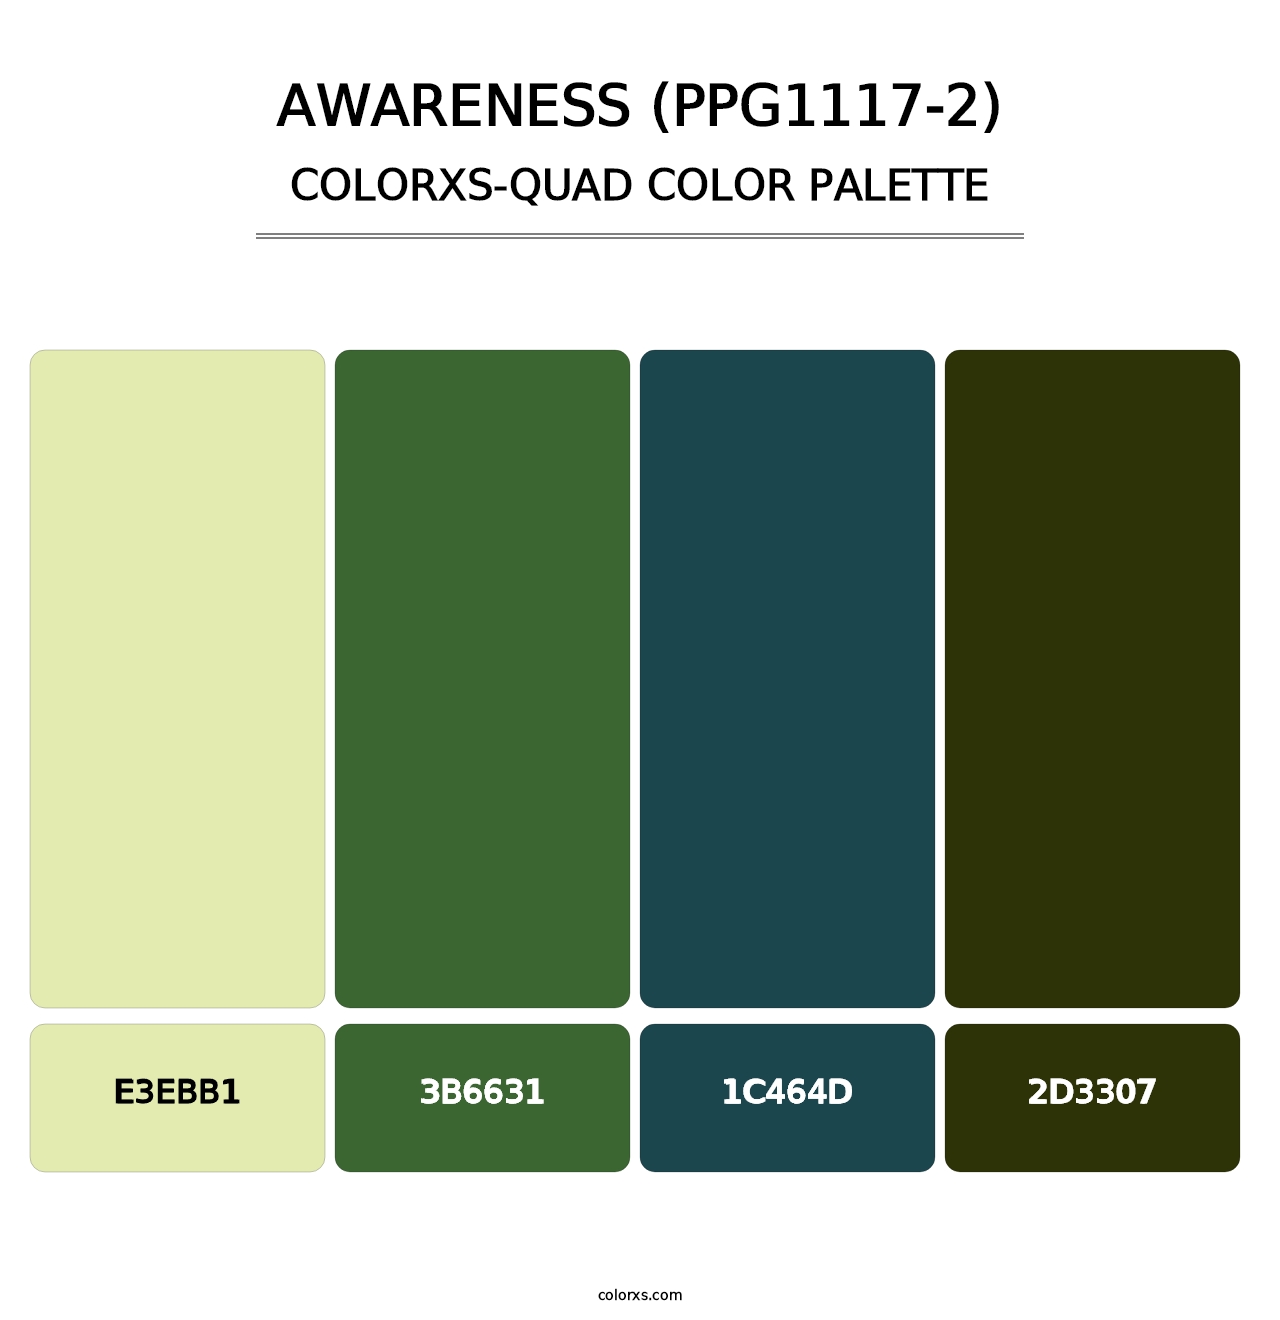 Awareness (PPG1117-2) - Colorxs Quad Palette